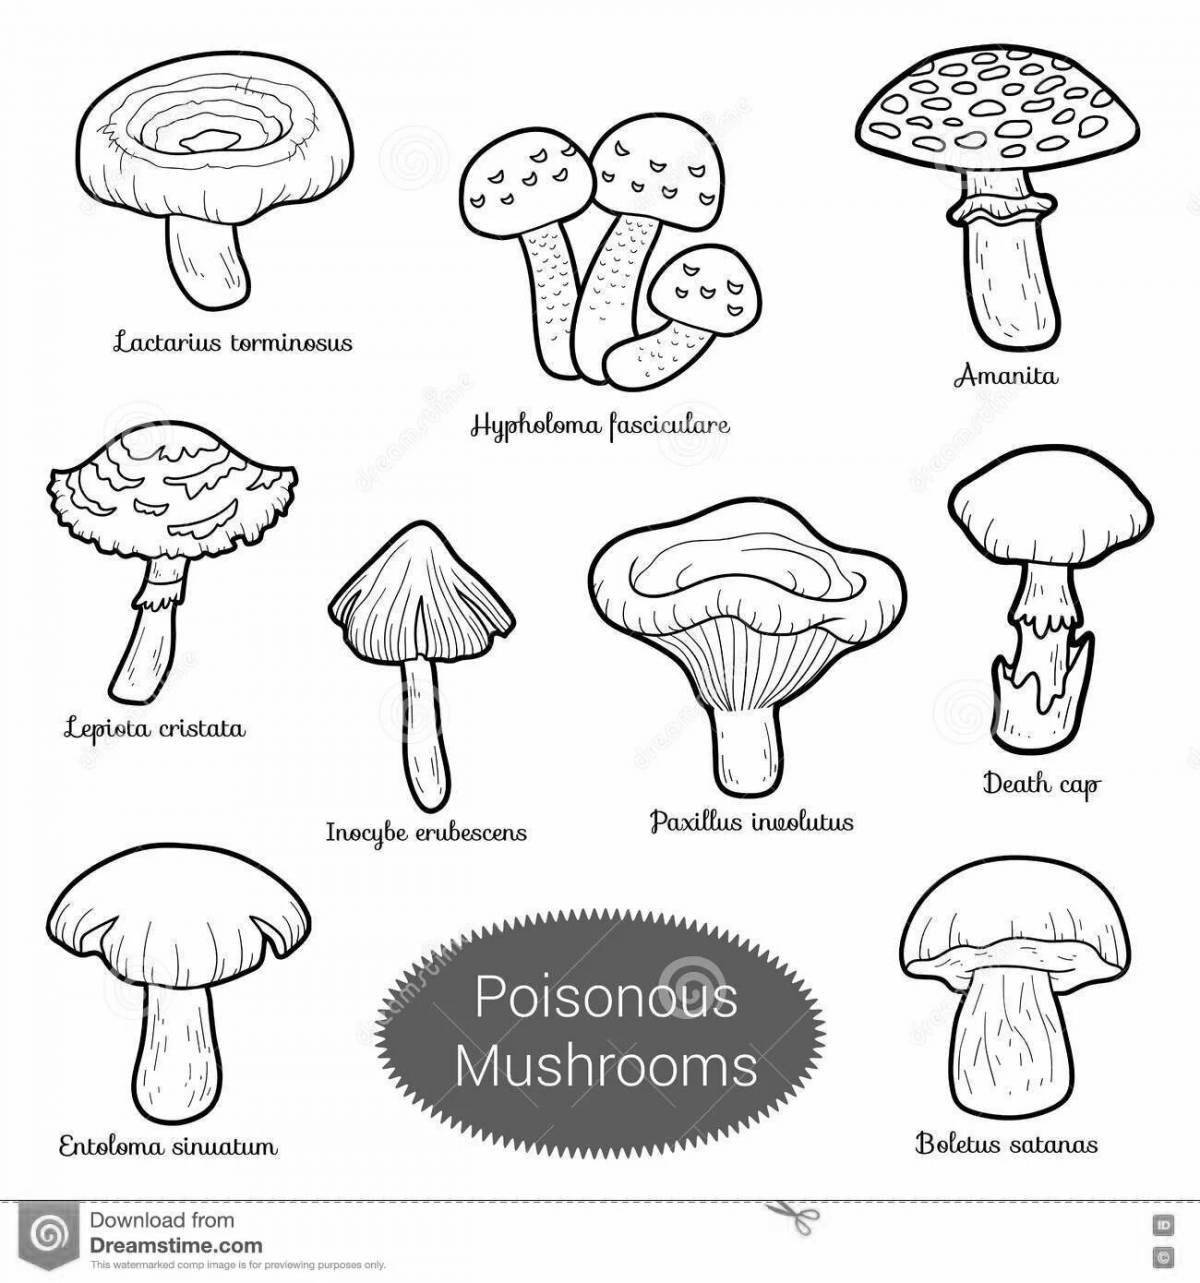 Radiant inedible mushrooms